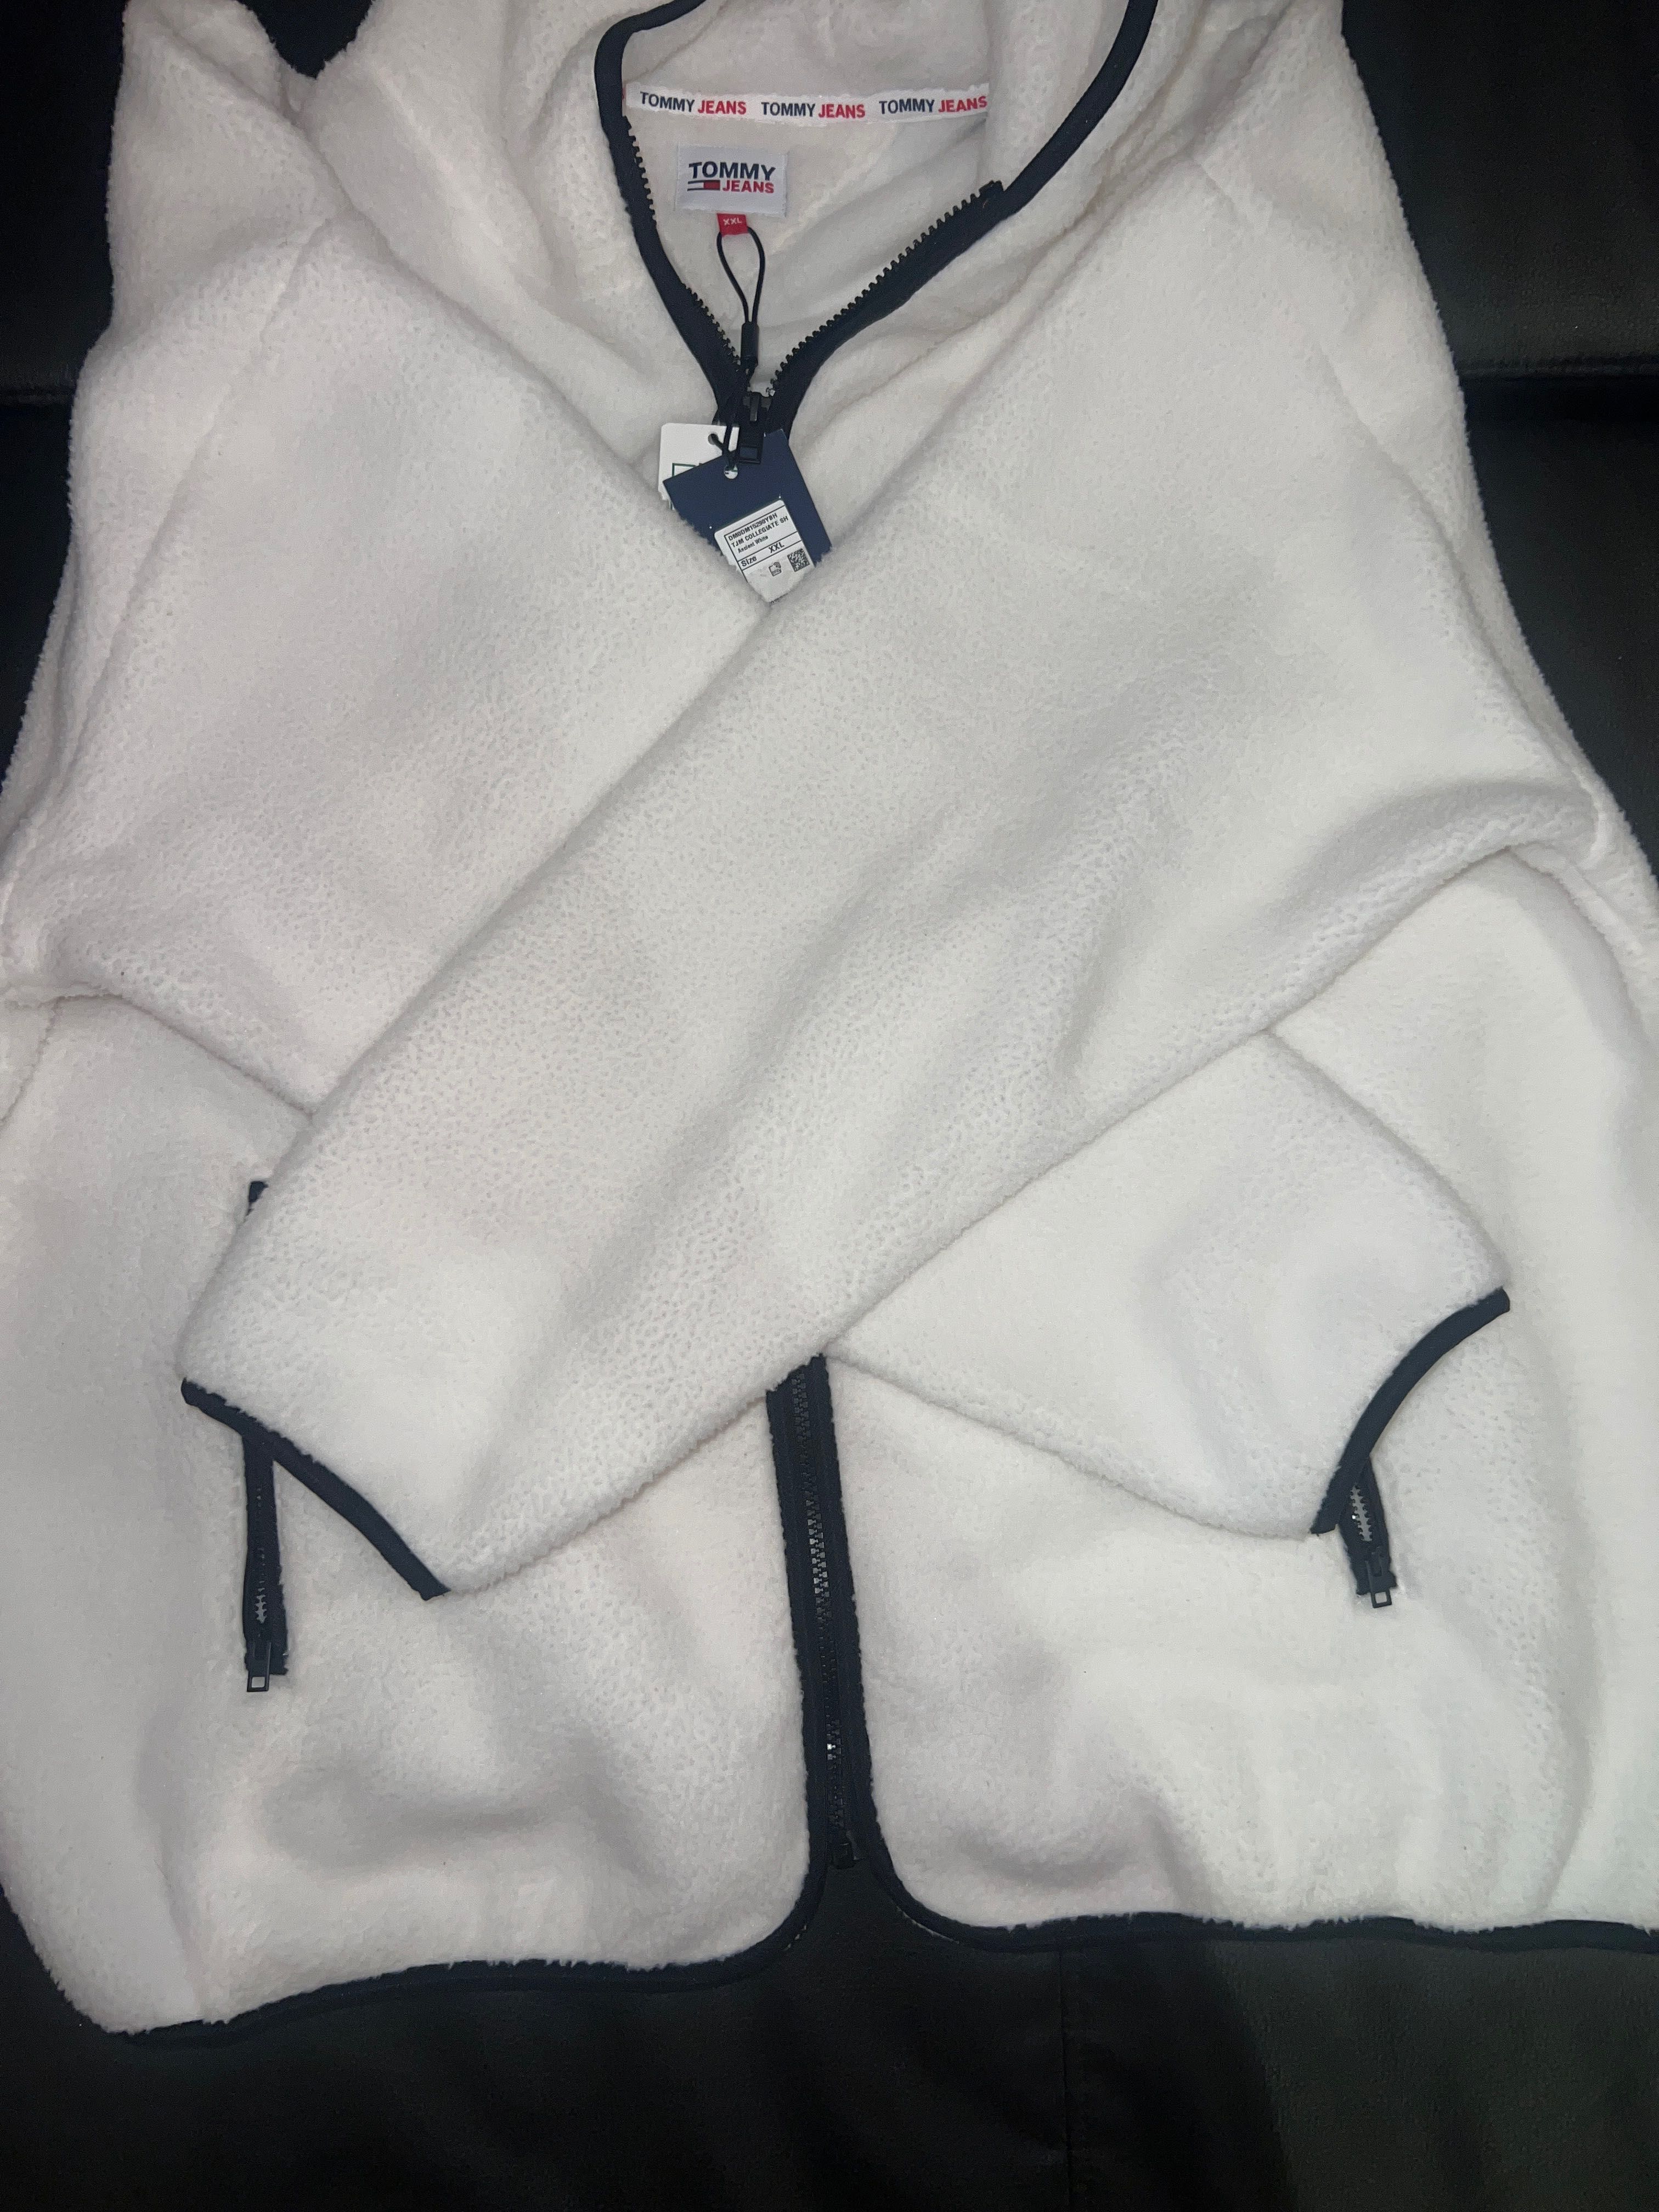 Kremowa bluza rozpinana z kapturem Tommy Hilfiger polar,baranek XXL